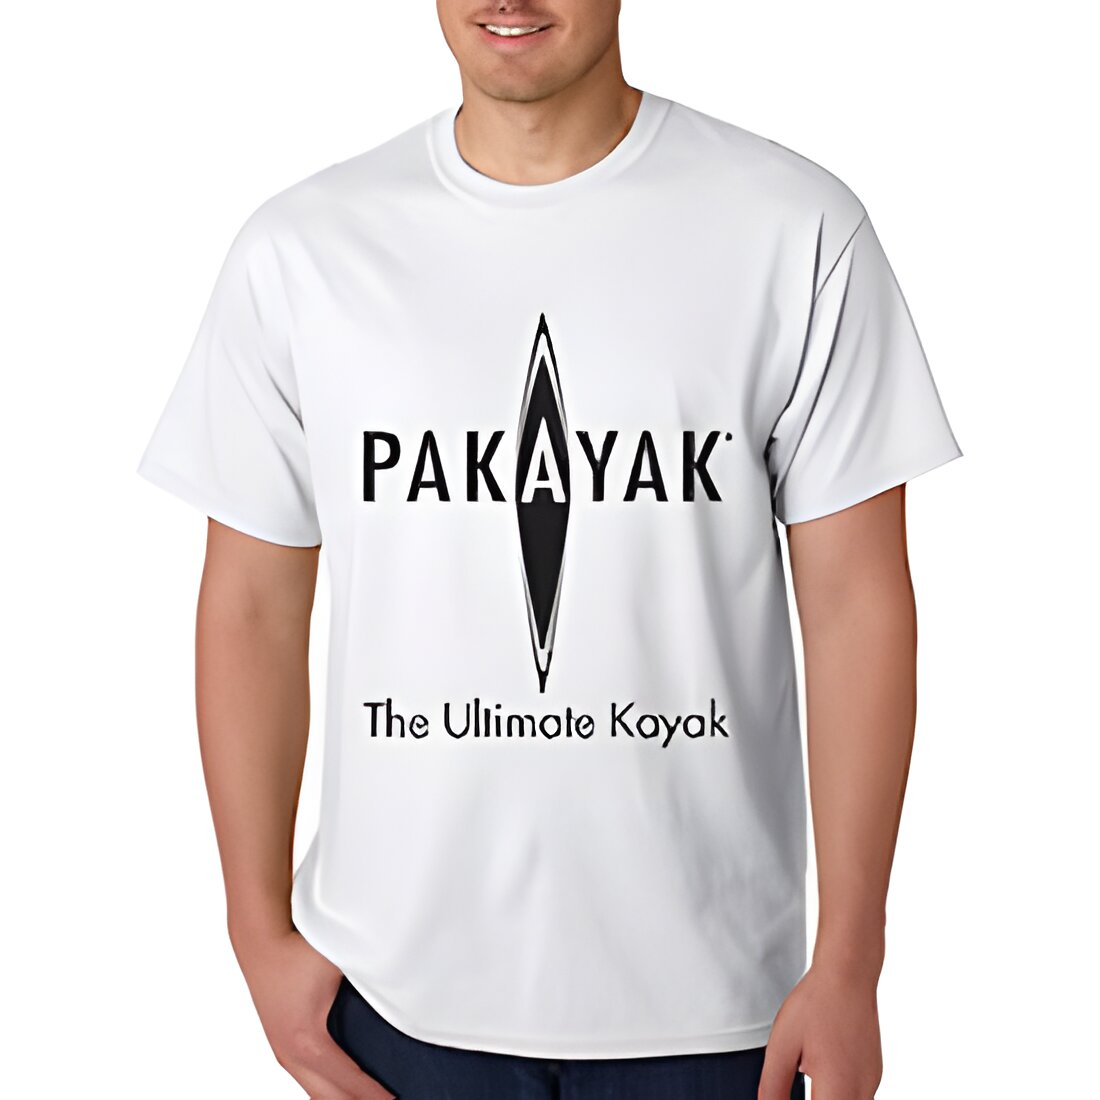 Free Pakayak T-Shirt